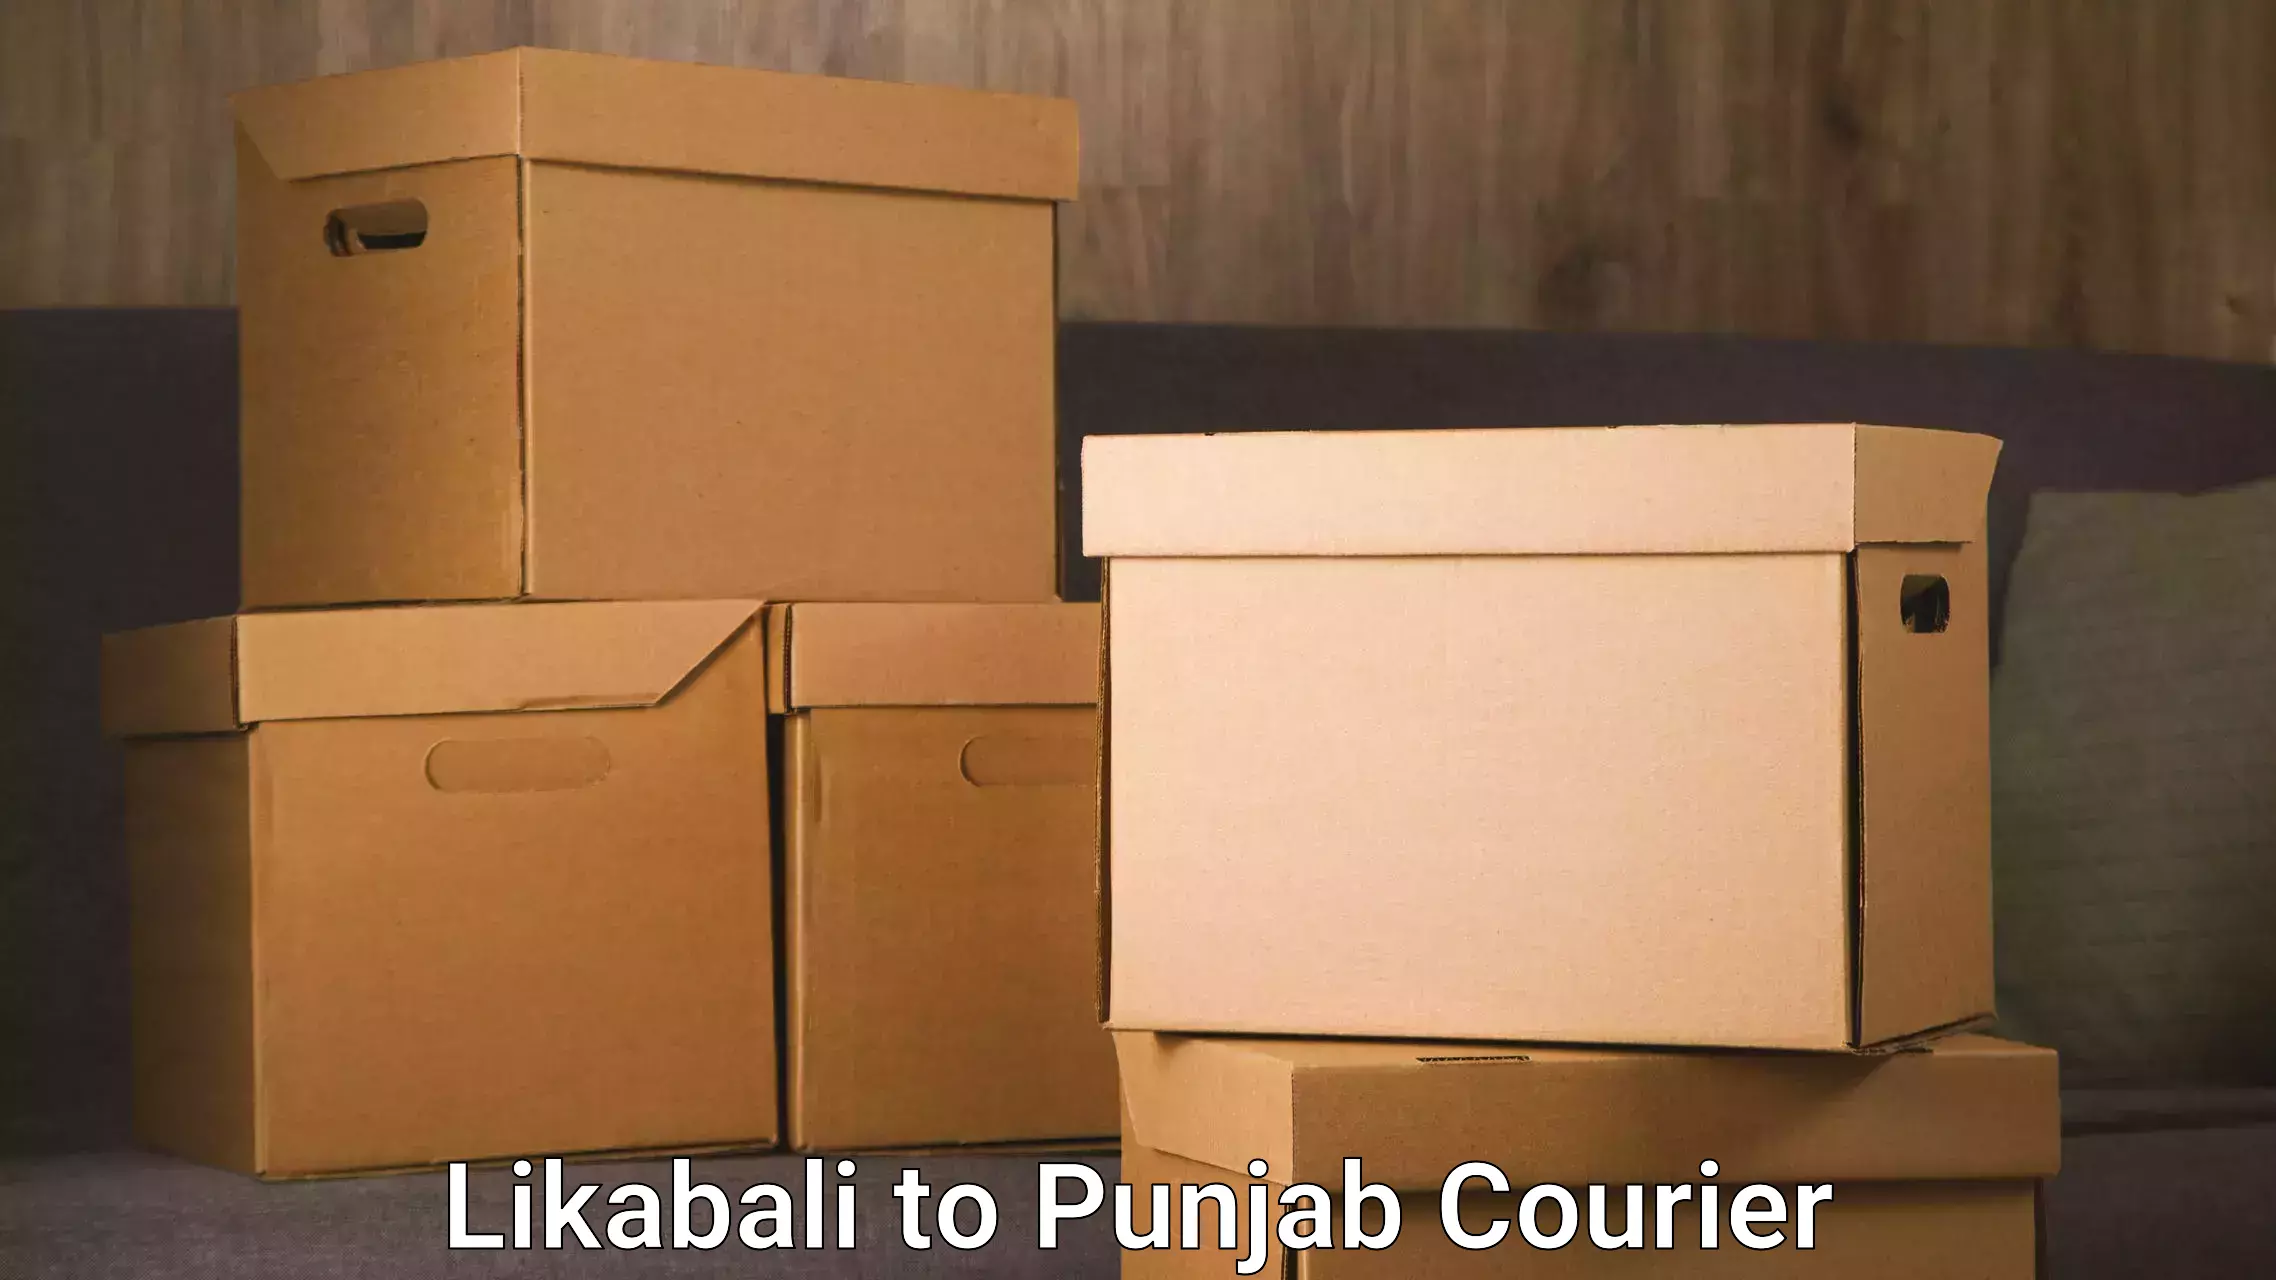 Courier service partnerships Likabali to Punjab